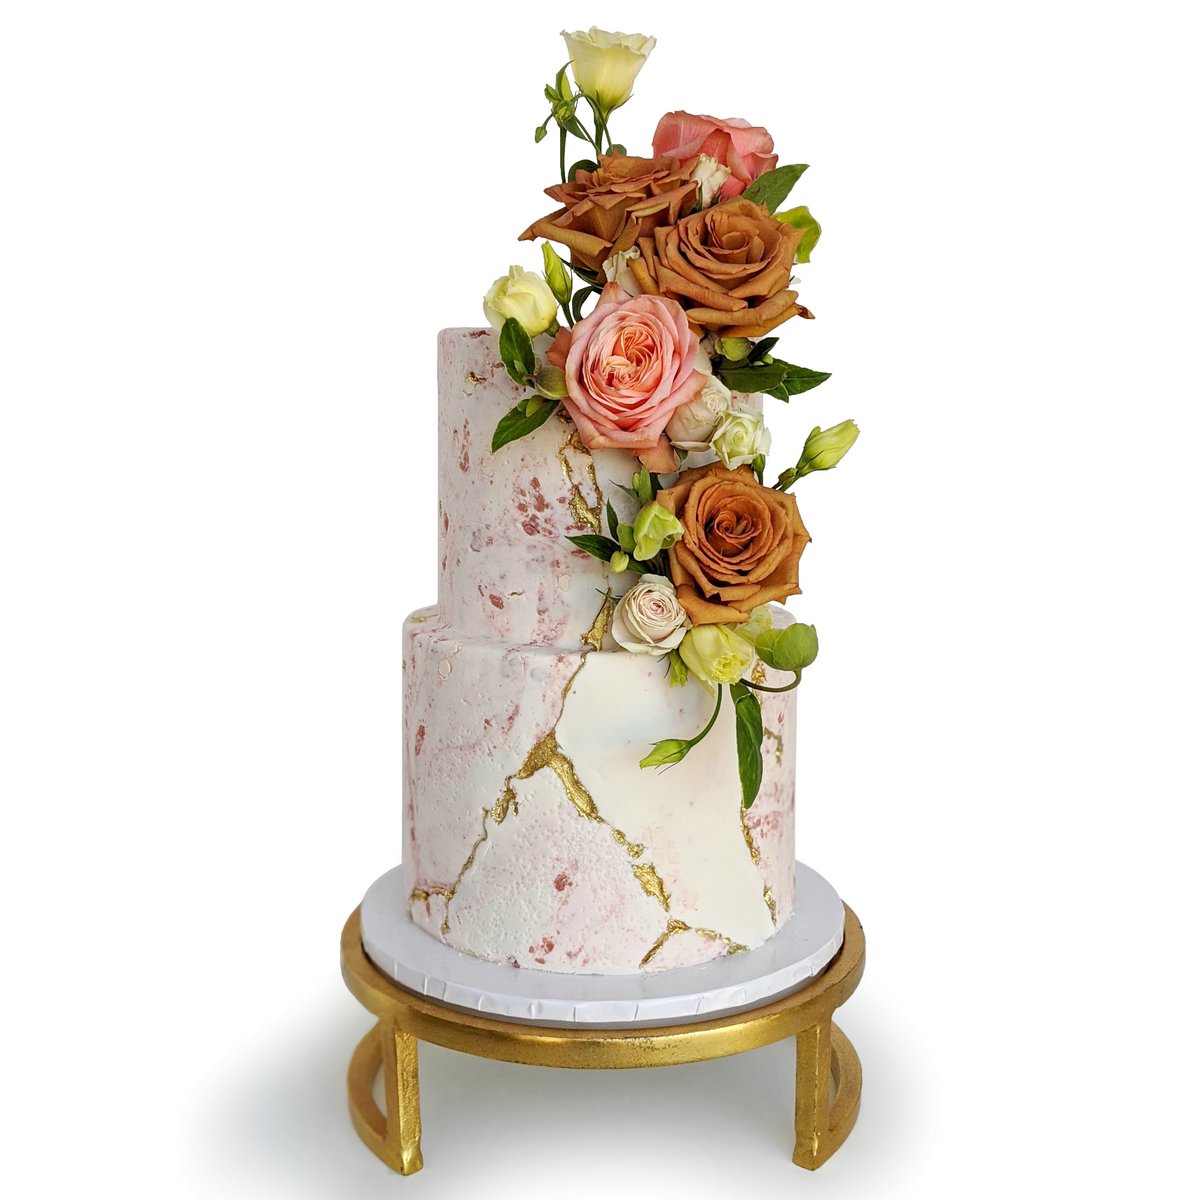 Whippt Kitchen - Wedding Cake 2